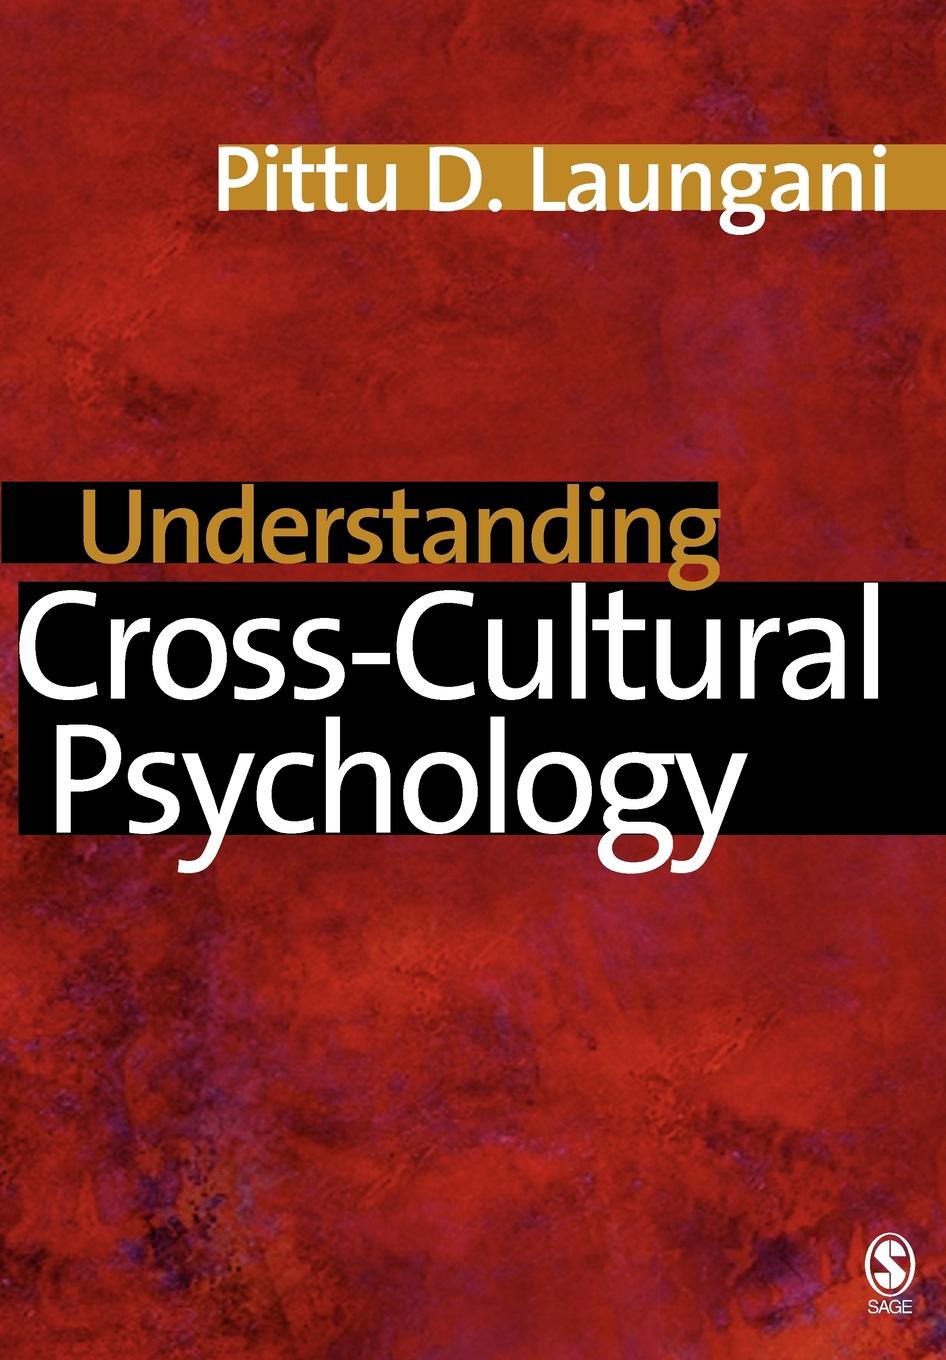 Cross-Cultural Psychology. Understanding cultures